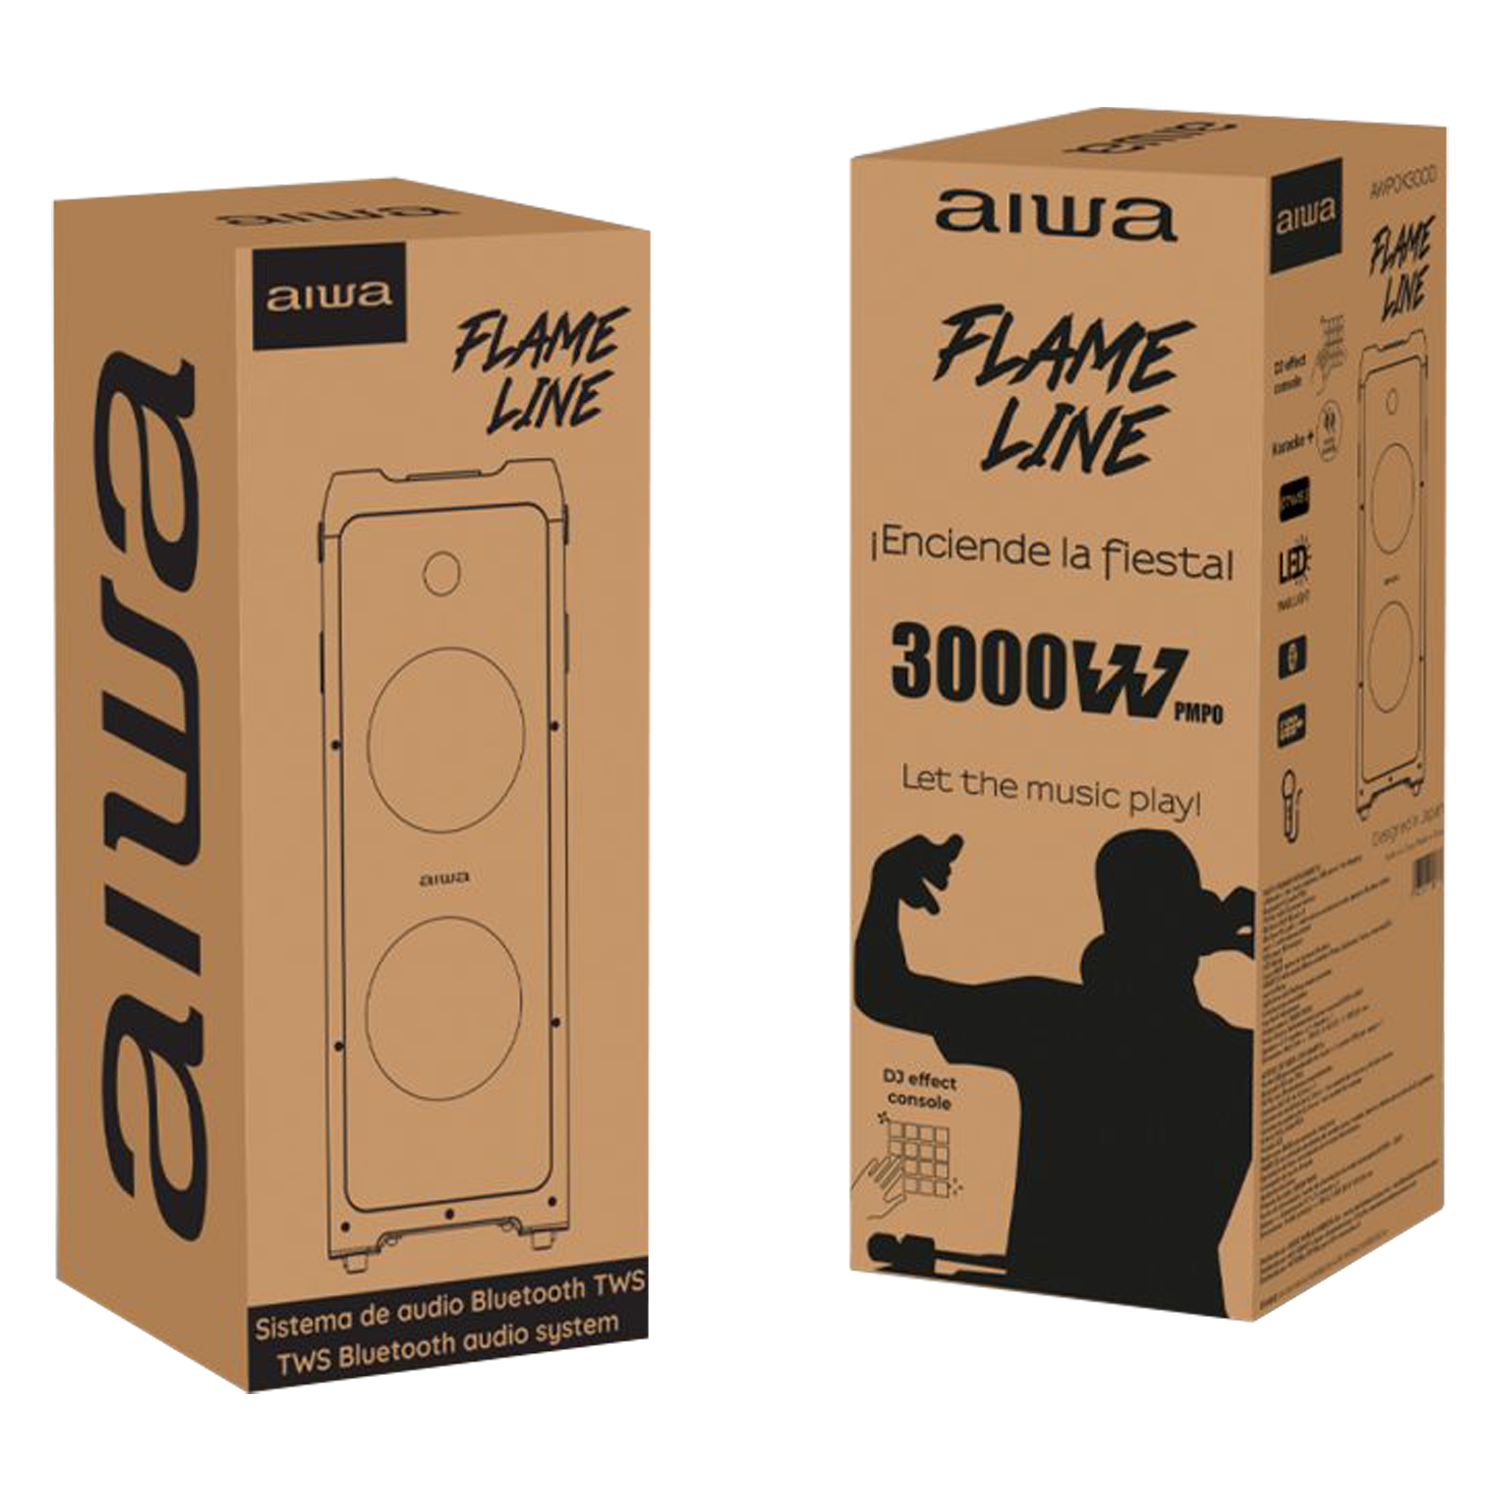 Caixa Karaokê Aiwa Flame Line AW-POK300D 10" 3.000 Watts / Bluetooth / USB / Rádio FM - Preto
